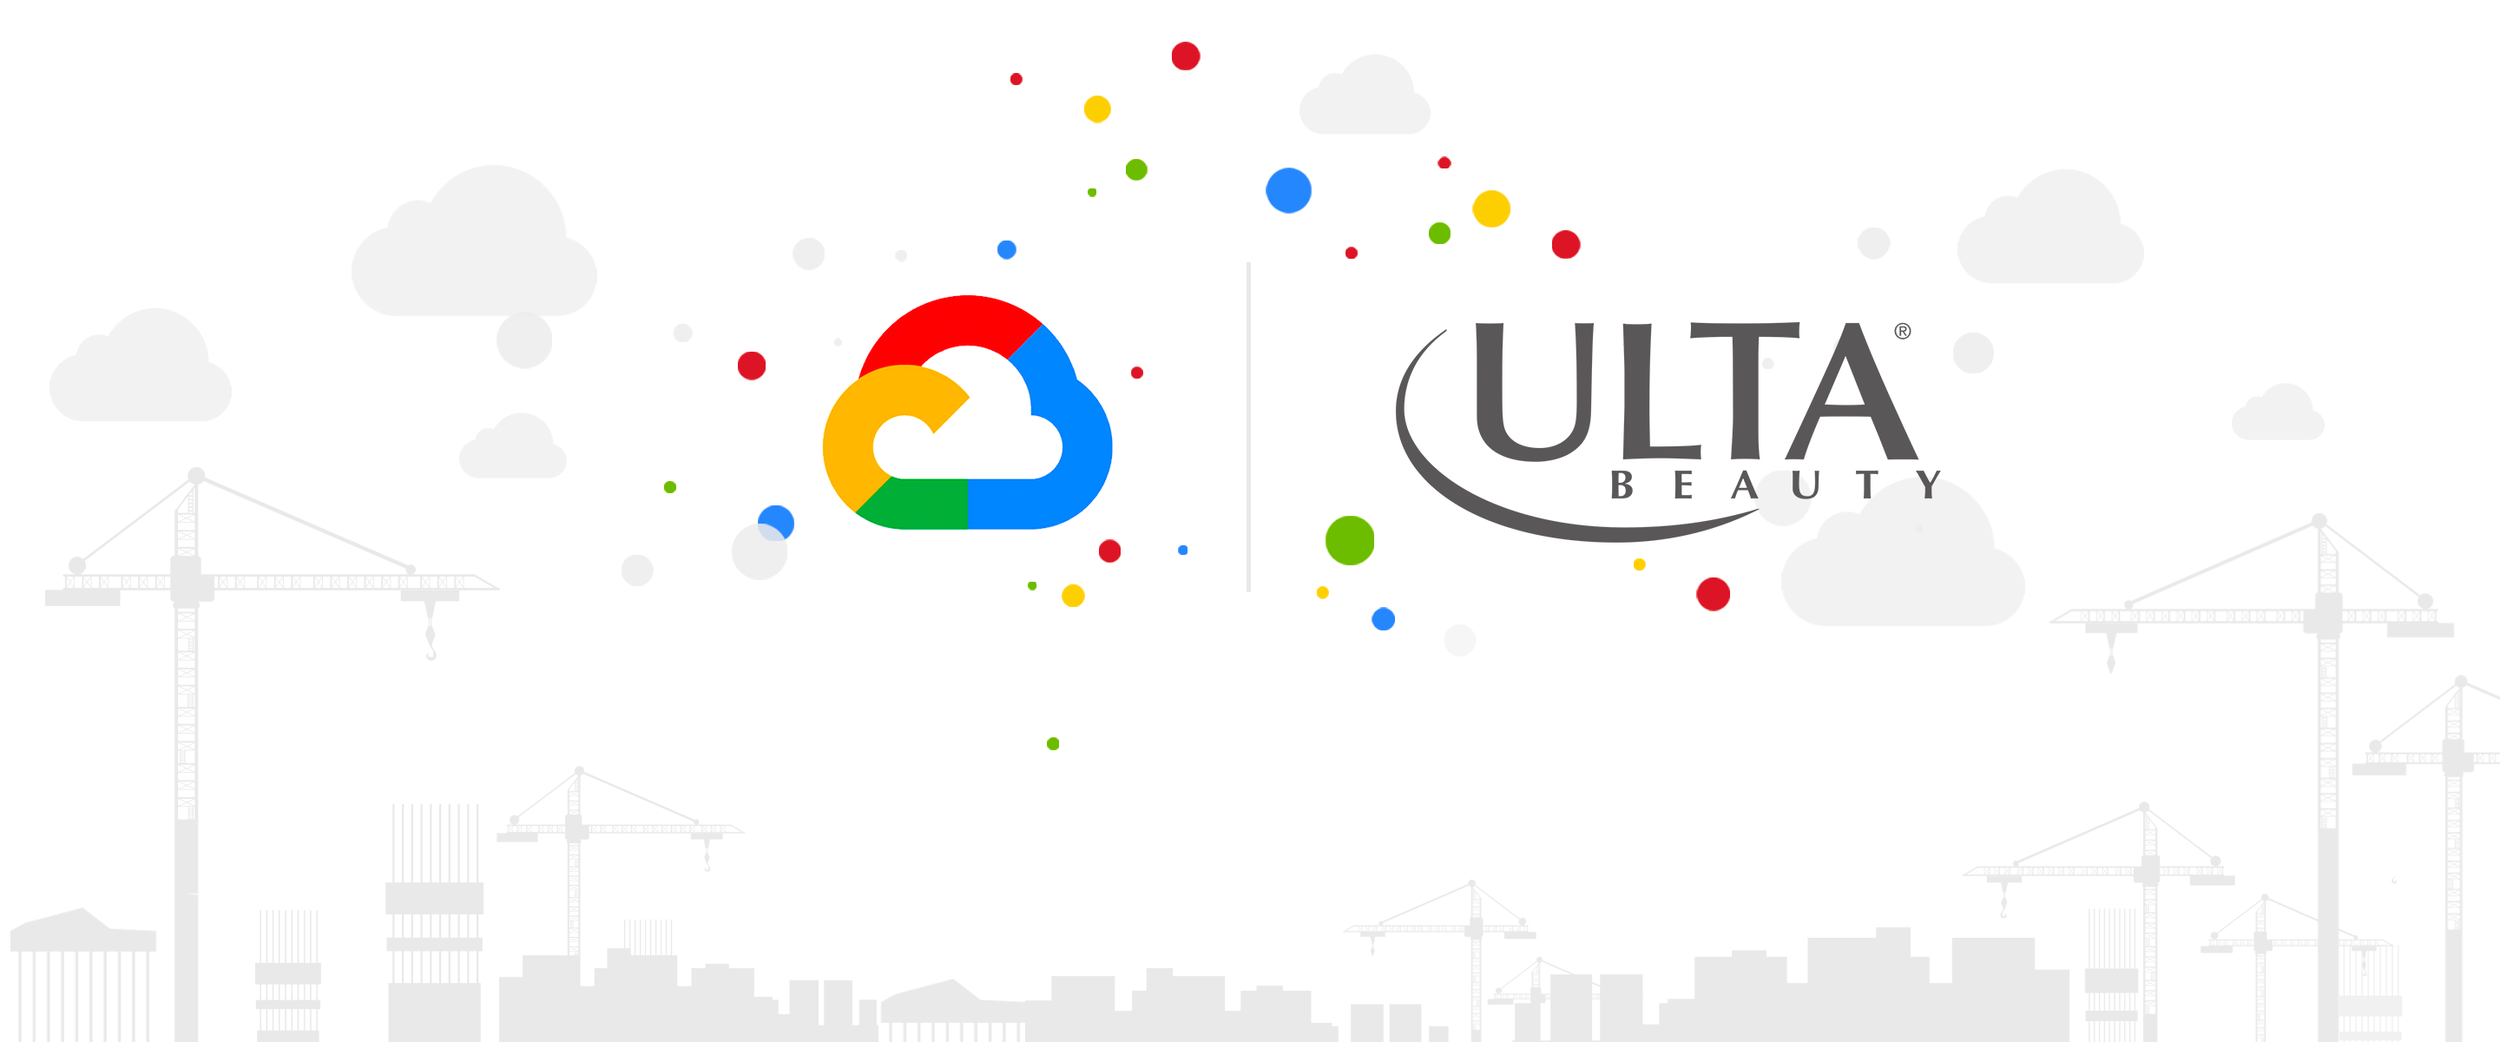 Finding the Ulta-mate Brand Partnerships